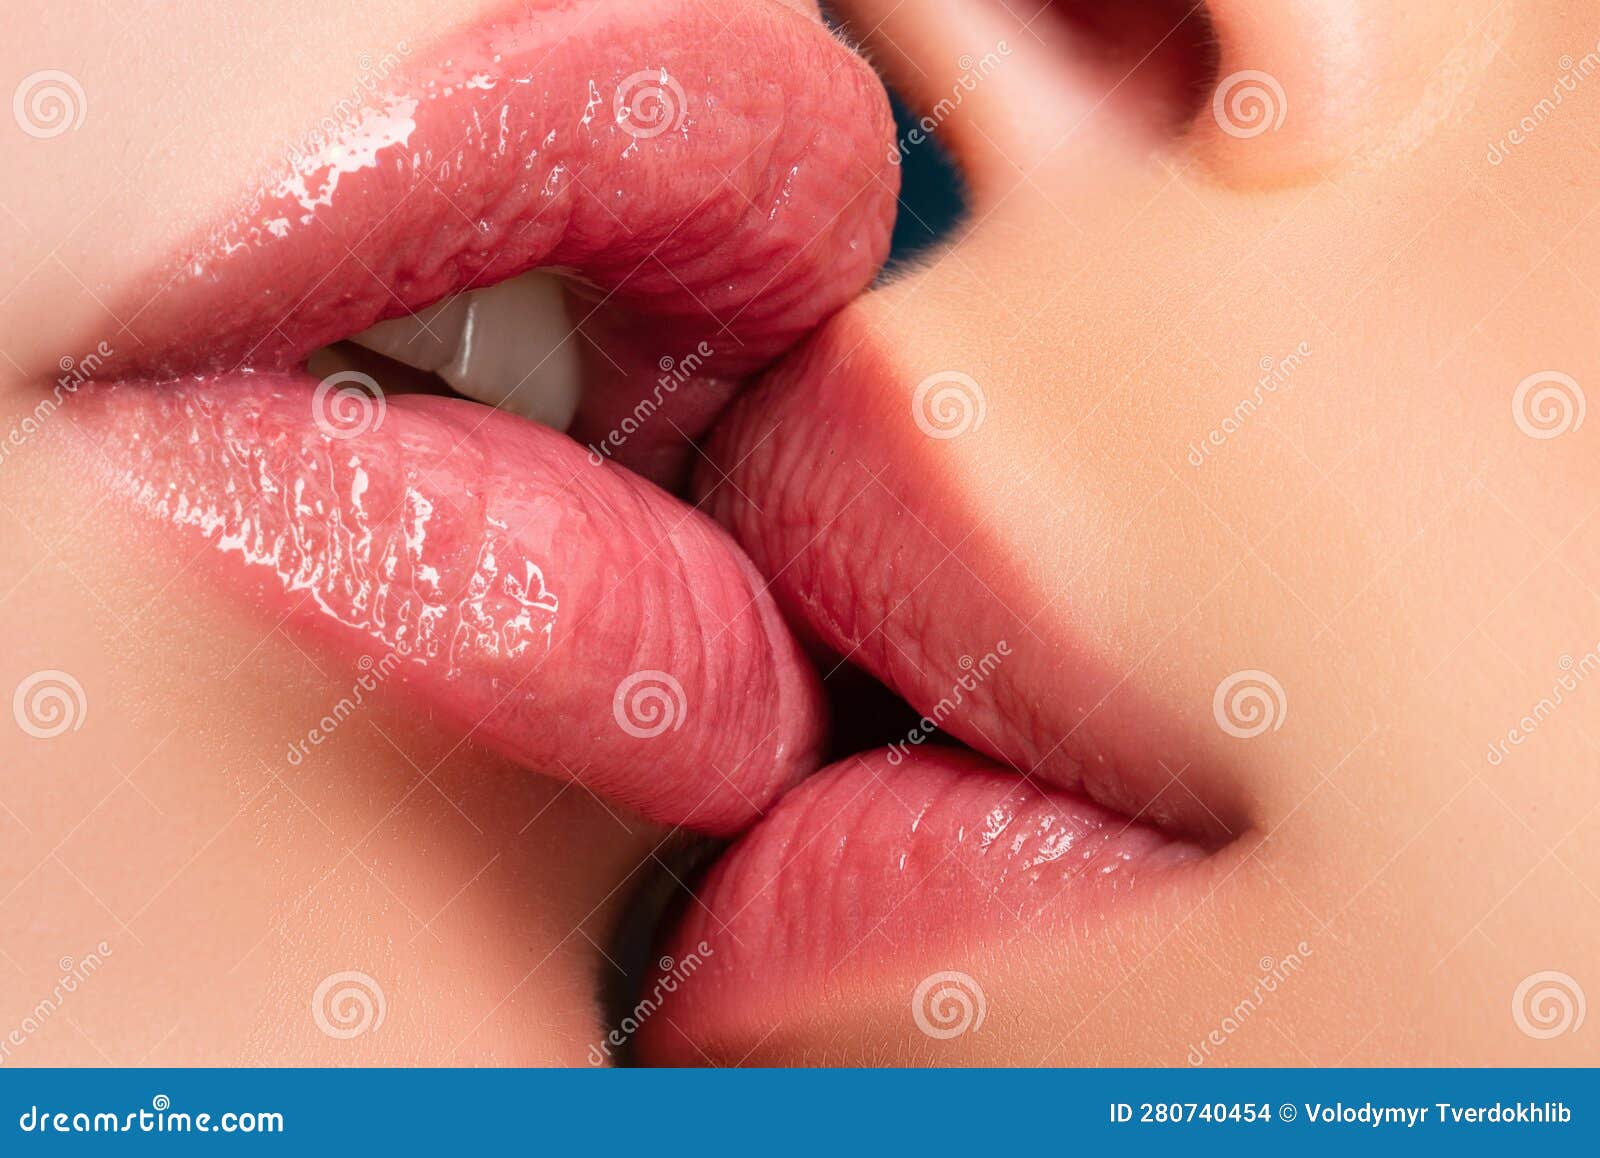 556 Couple Tongue Kiss Stock Photos photo